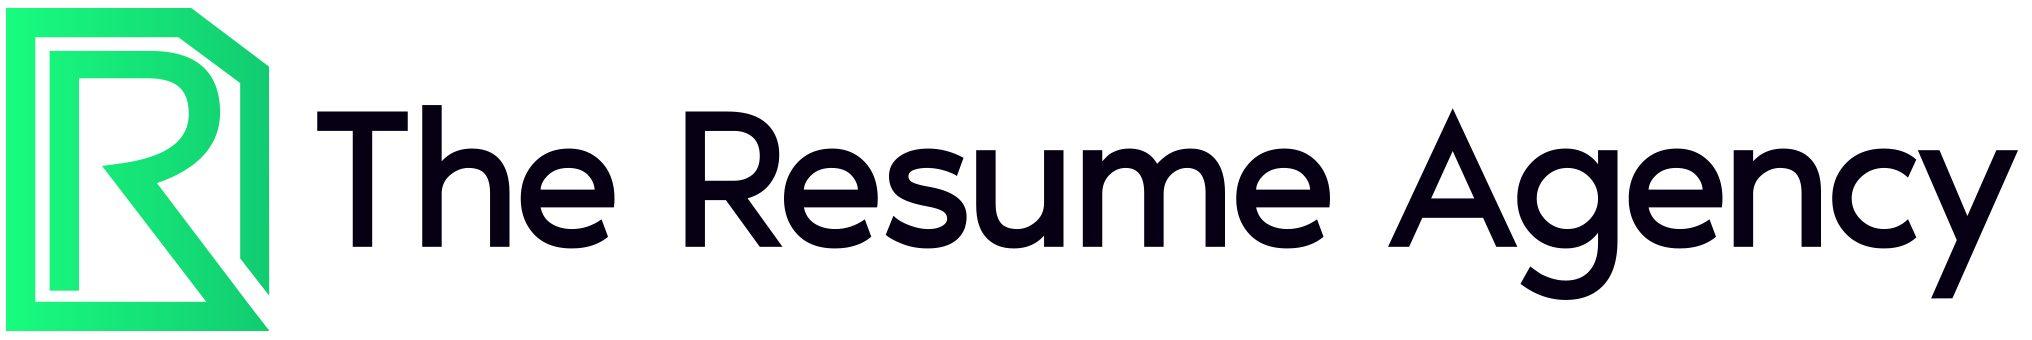 The Resume Agency Logo